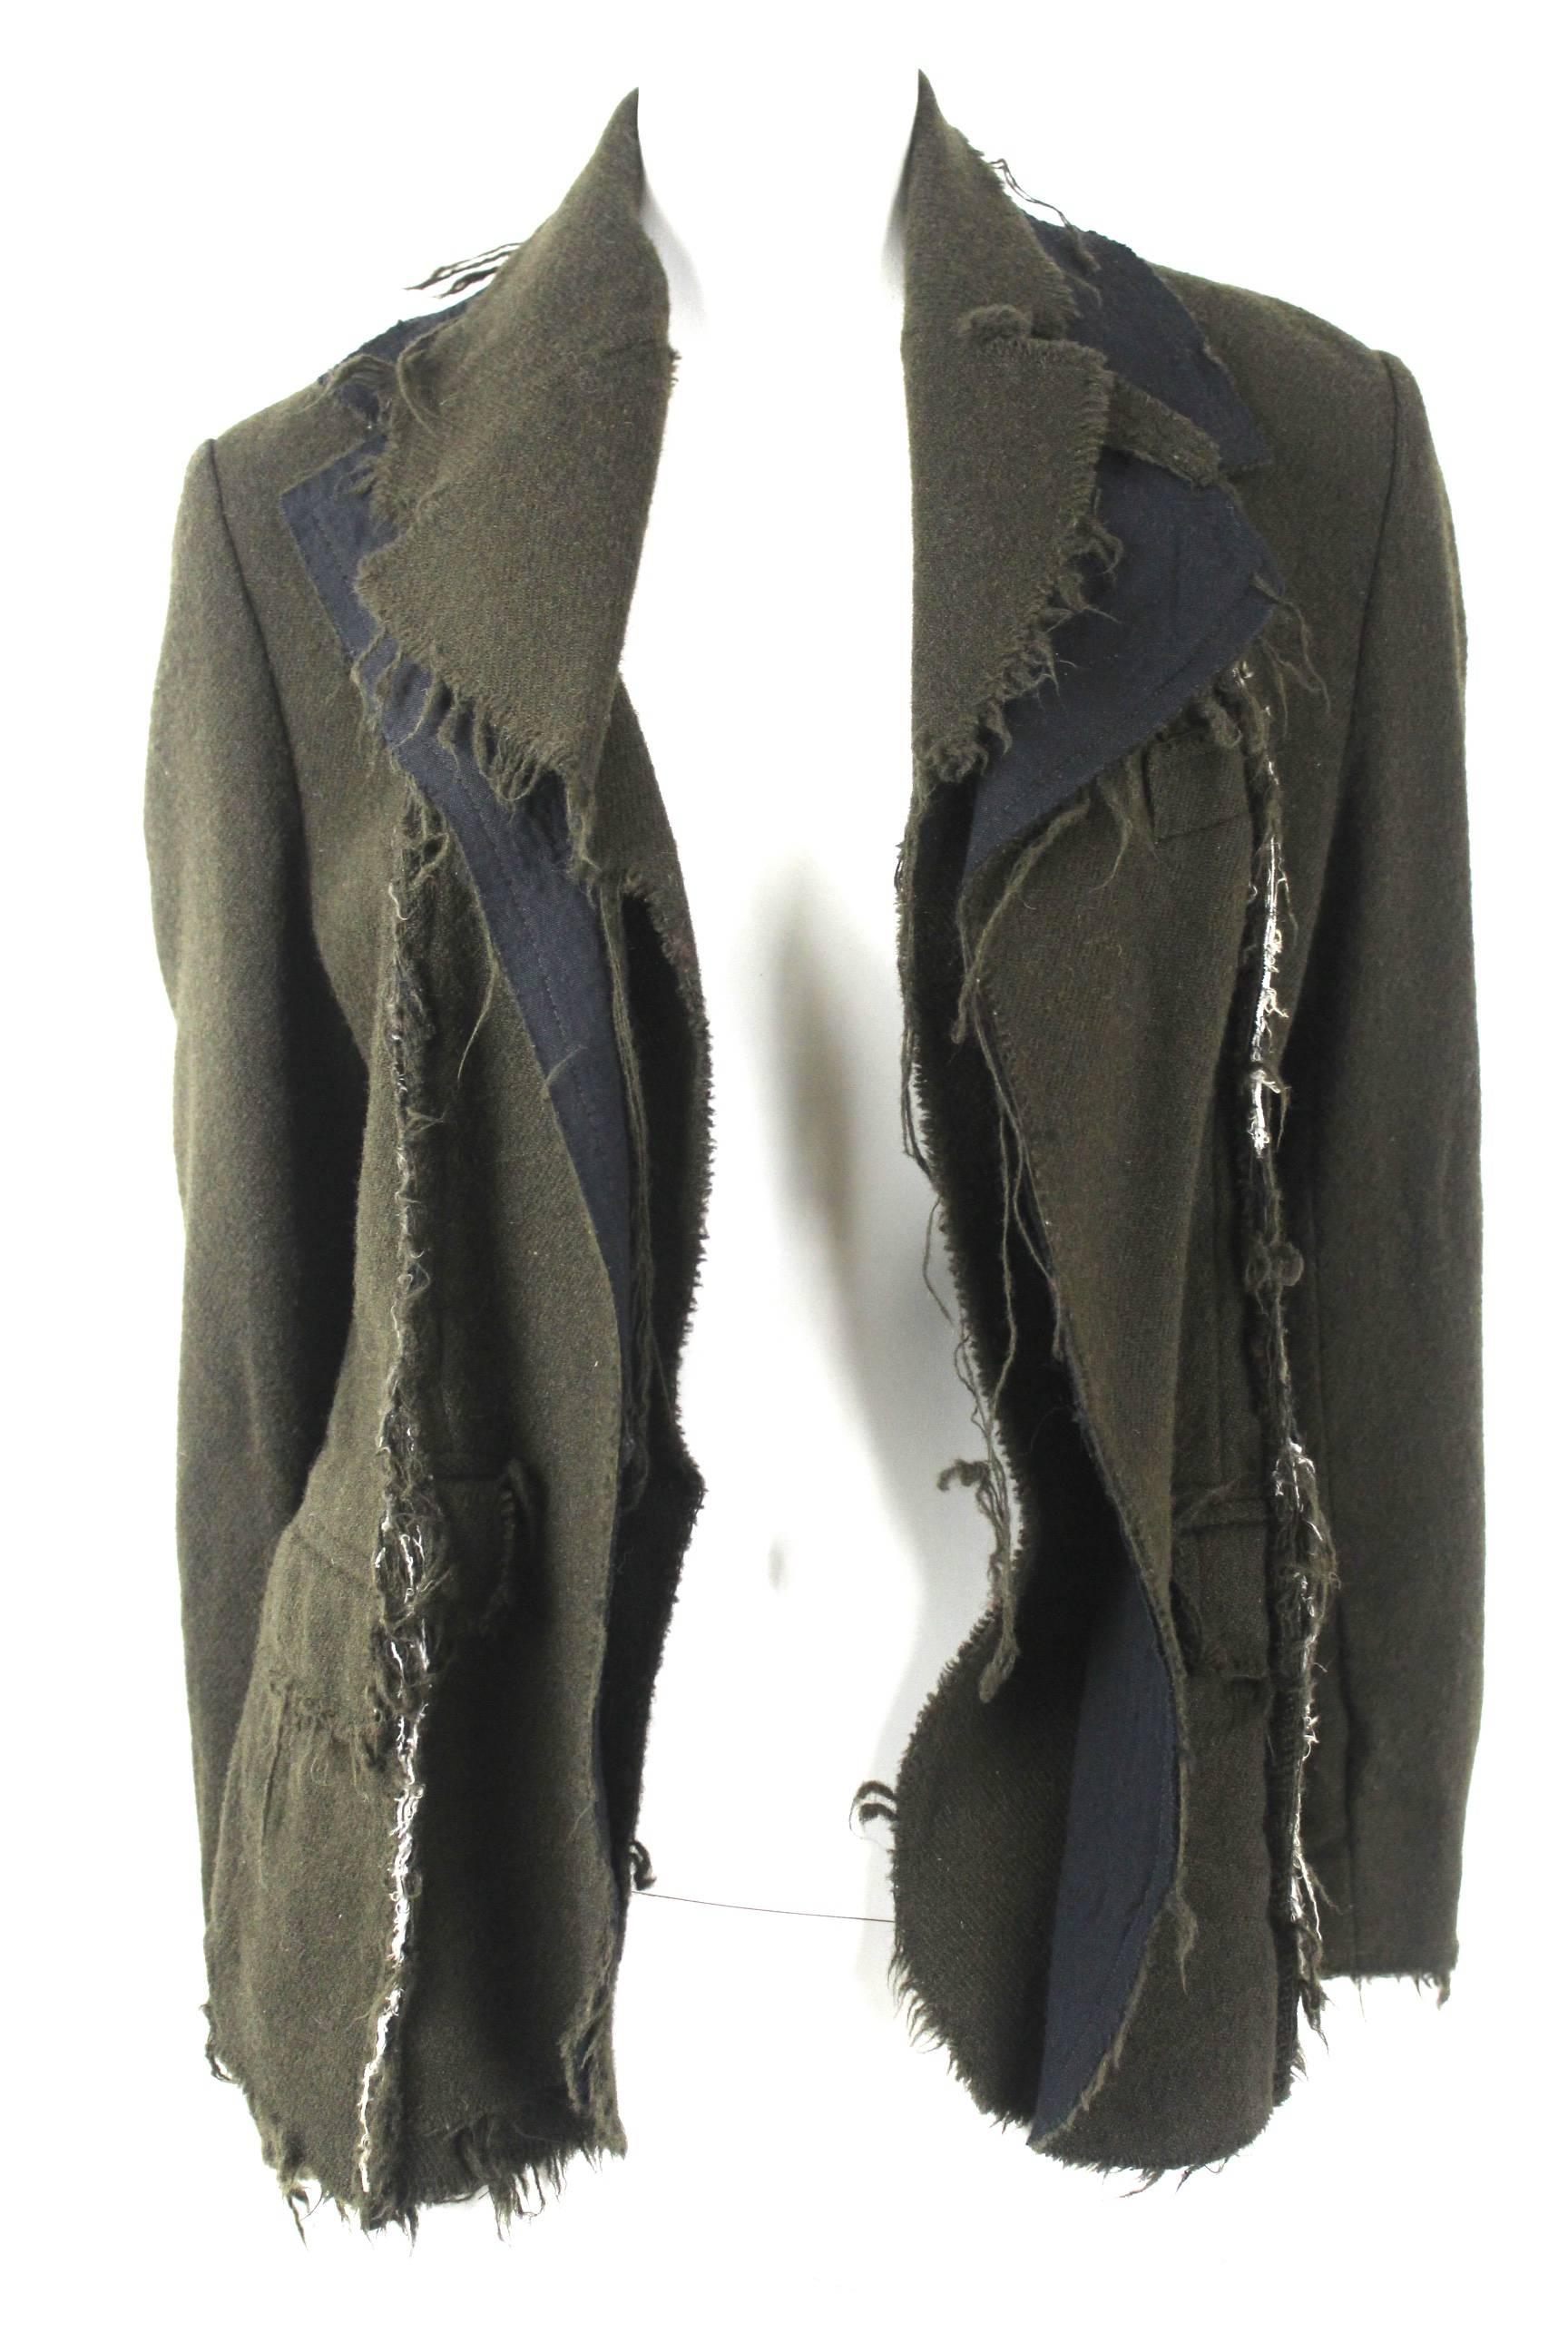 Tricot Comme des Garcons 2003 Collection Raw Construction Jacket
Labelled size M
Excellent condition